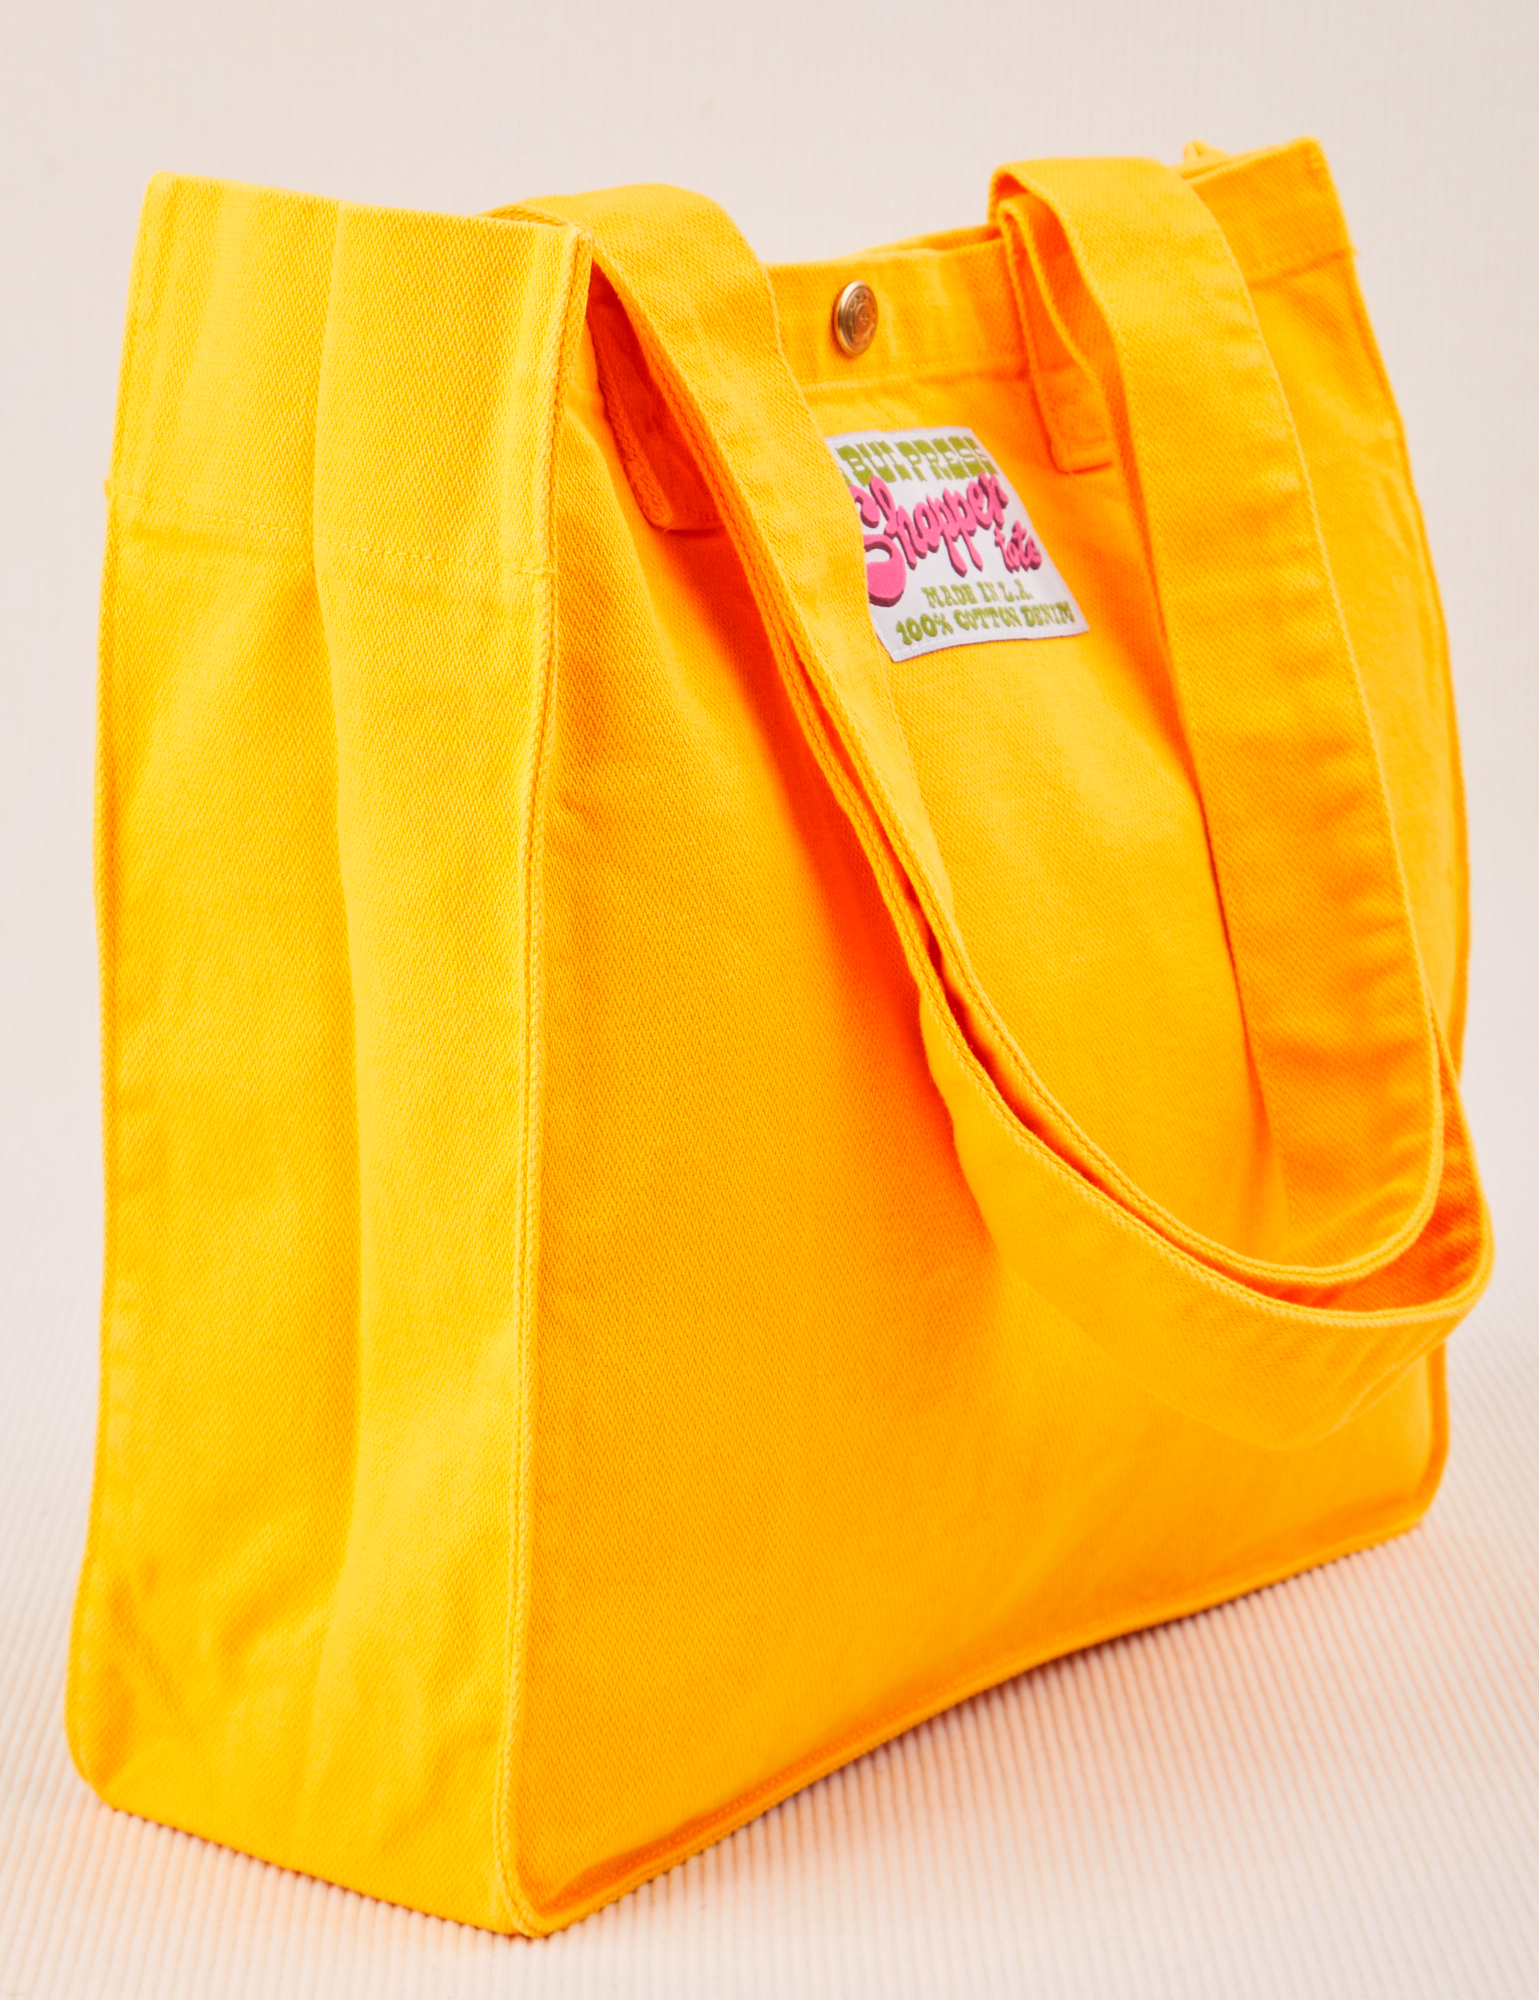 Shopper Tote Bag – BIG BUD PRESS